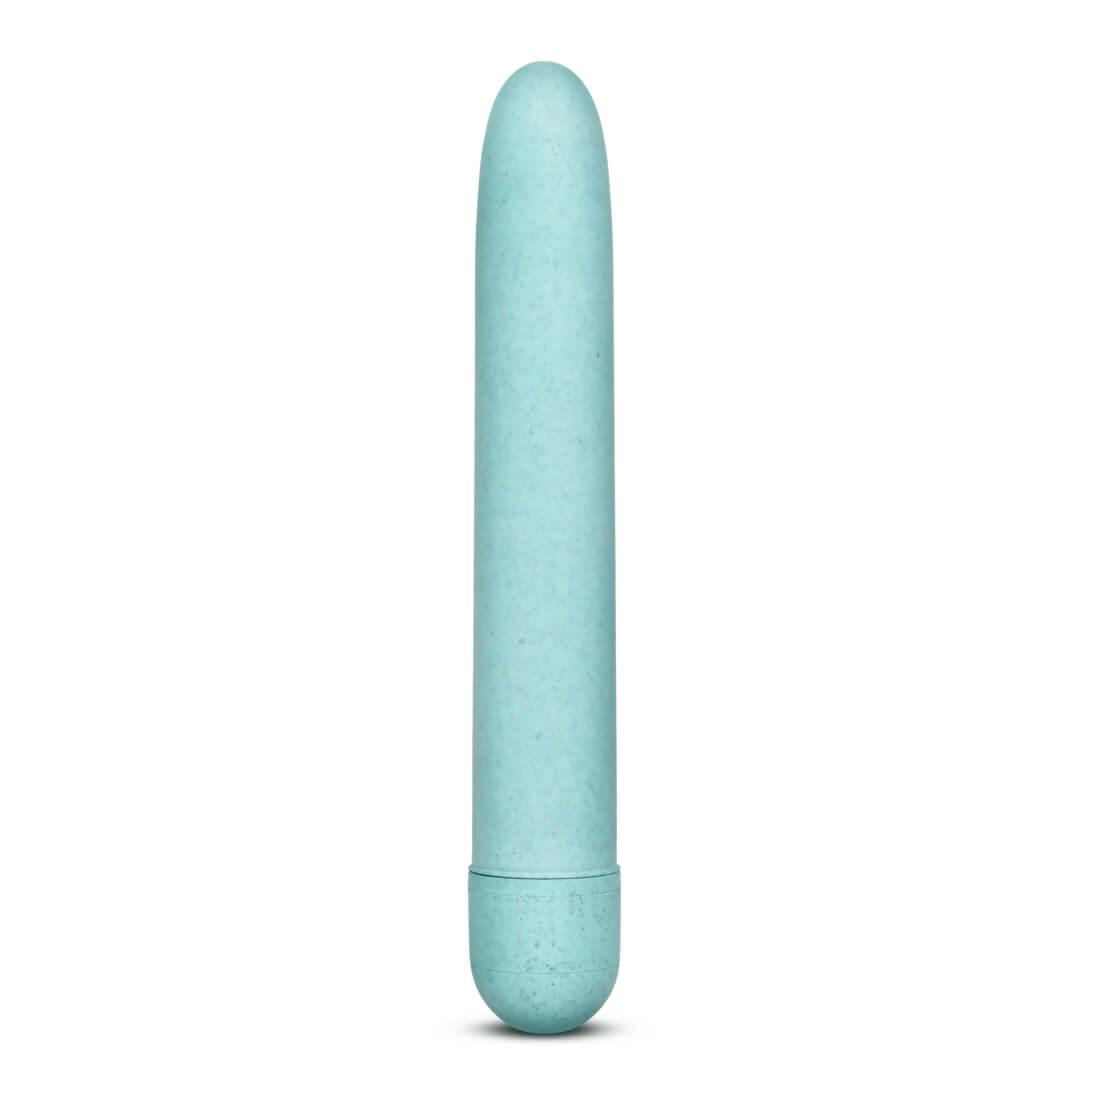 Gaia Eco Biodegradable Vibrator in Aqua color - The Bigger O - online sex toy shop USA, Canada & UK shipping available